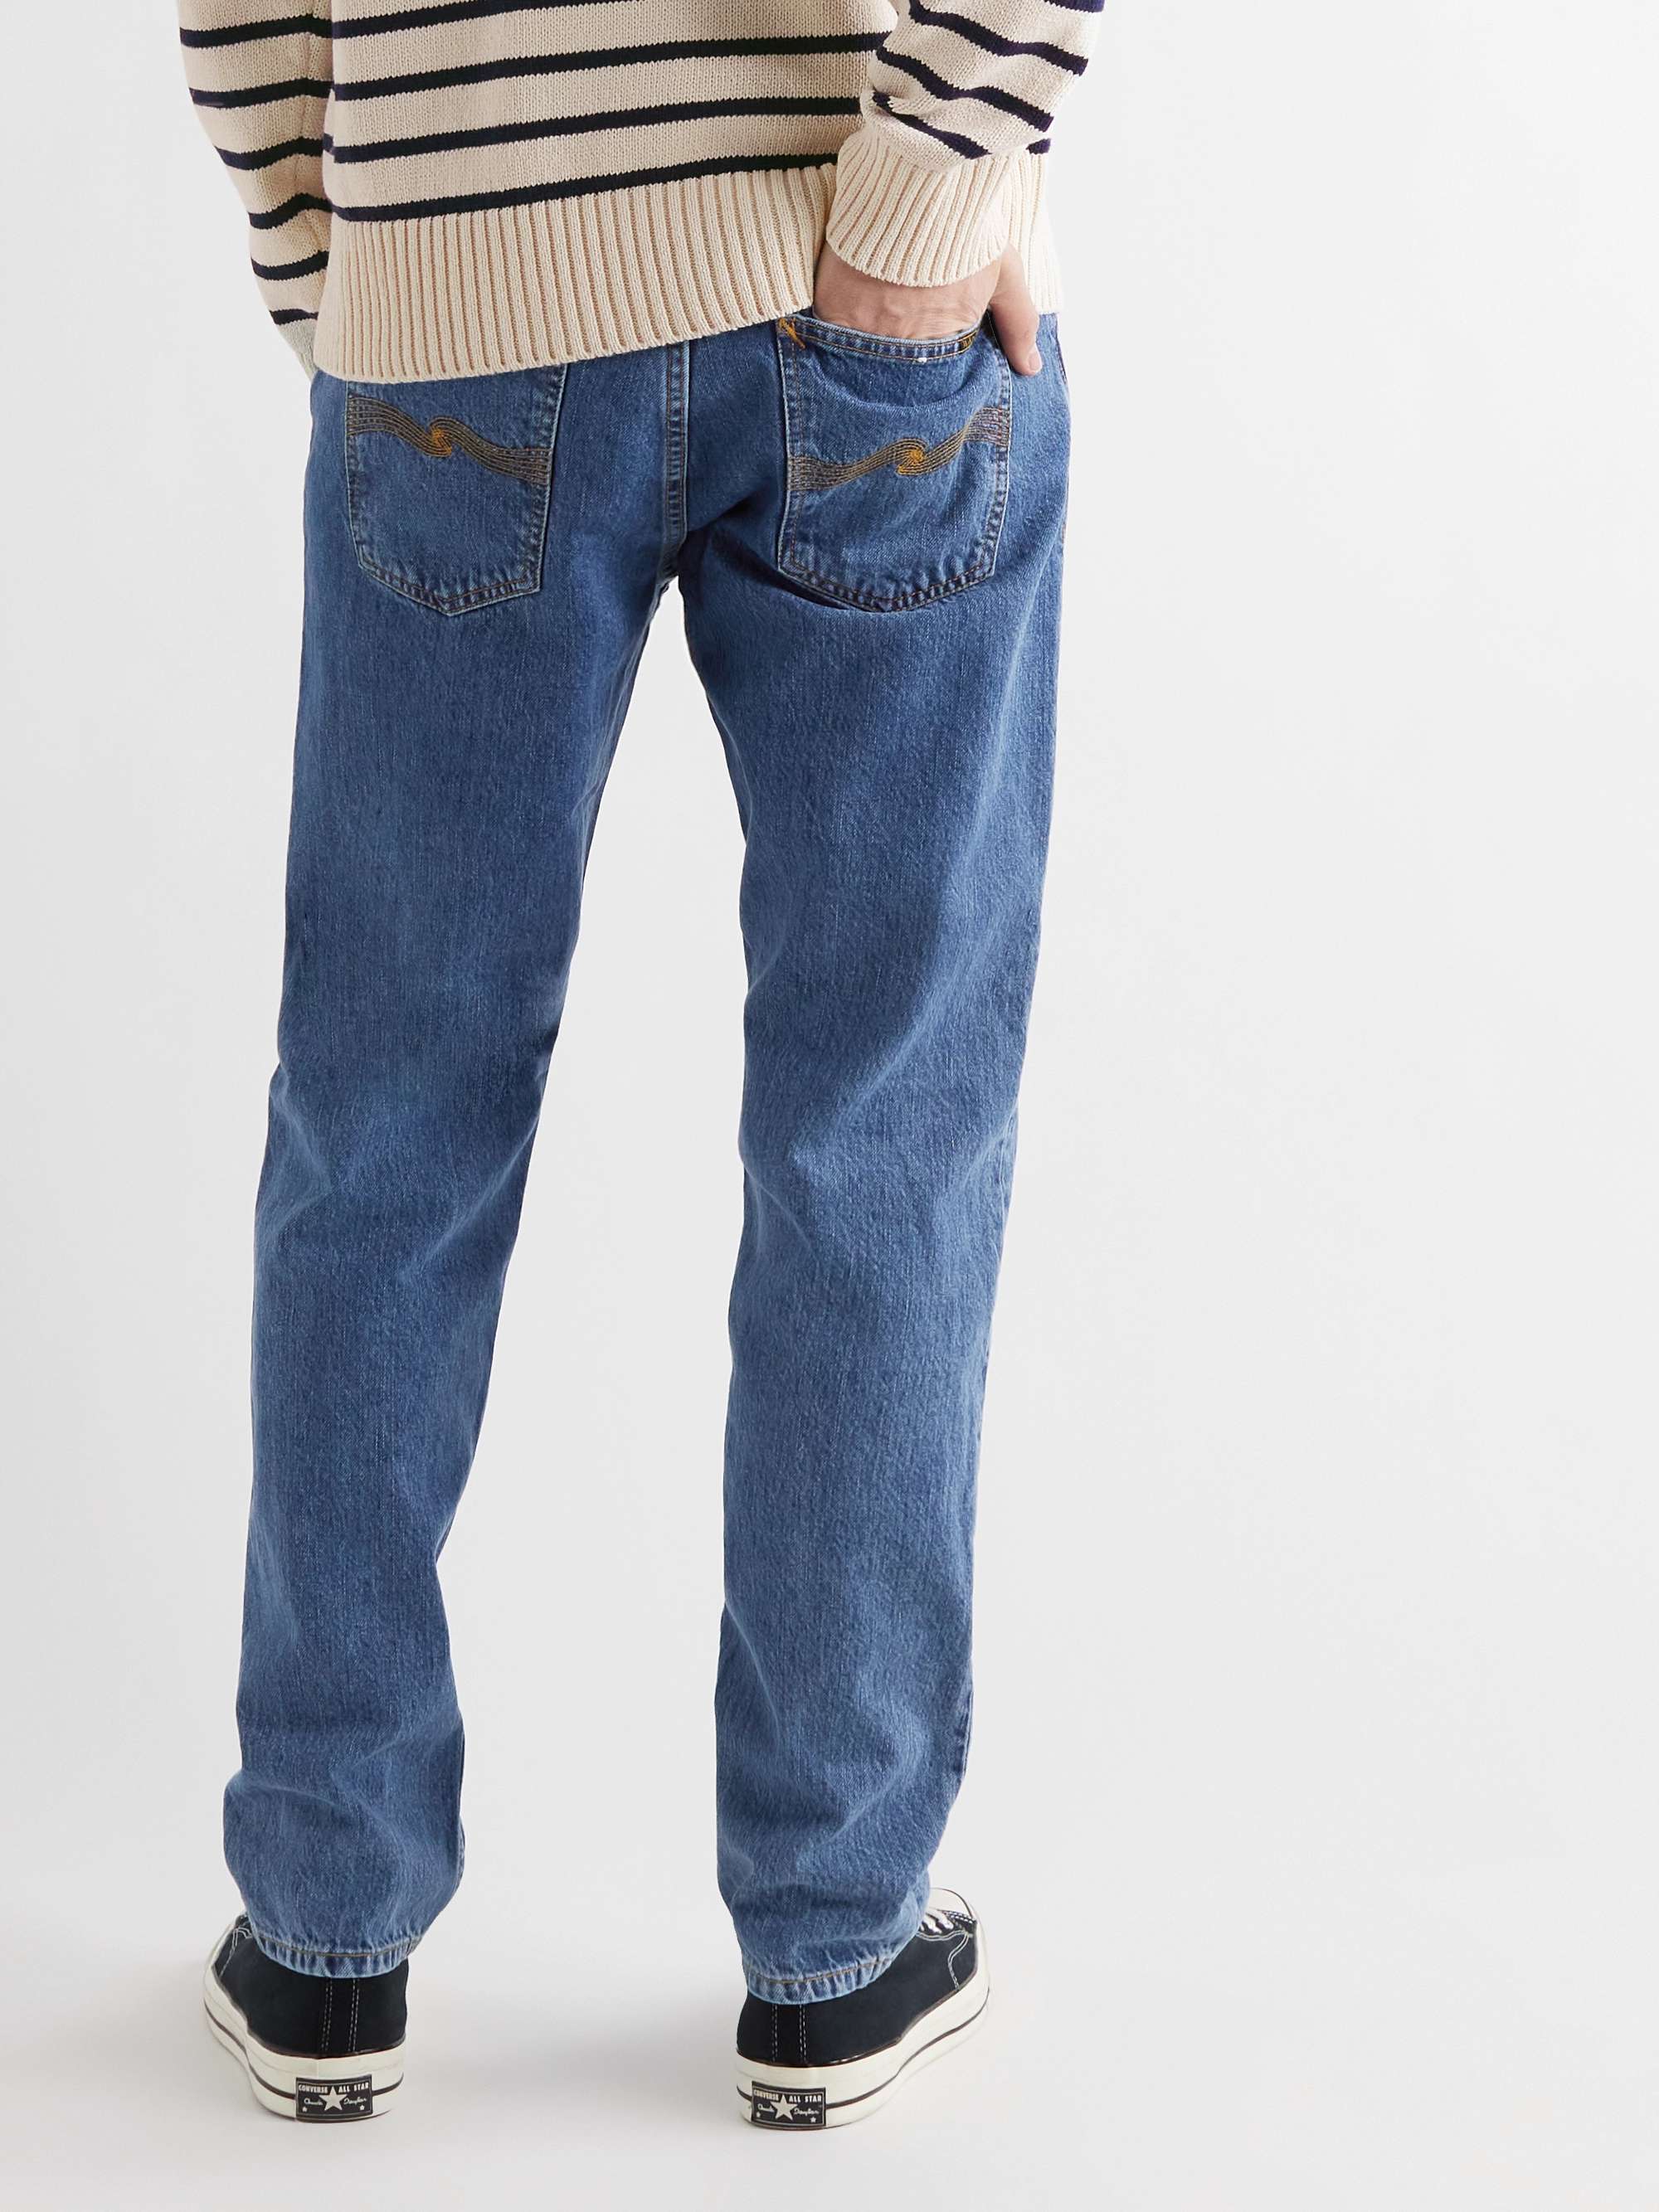 NUDIE JEANS Steady Eddie II Tapered Organic Denim Jeans | MR PORTER